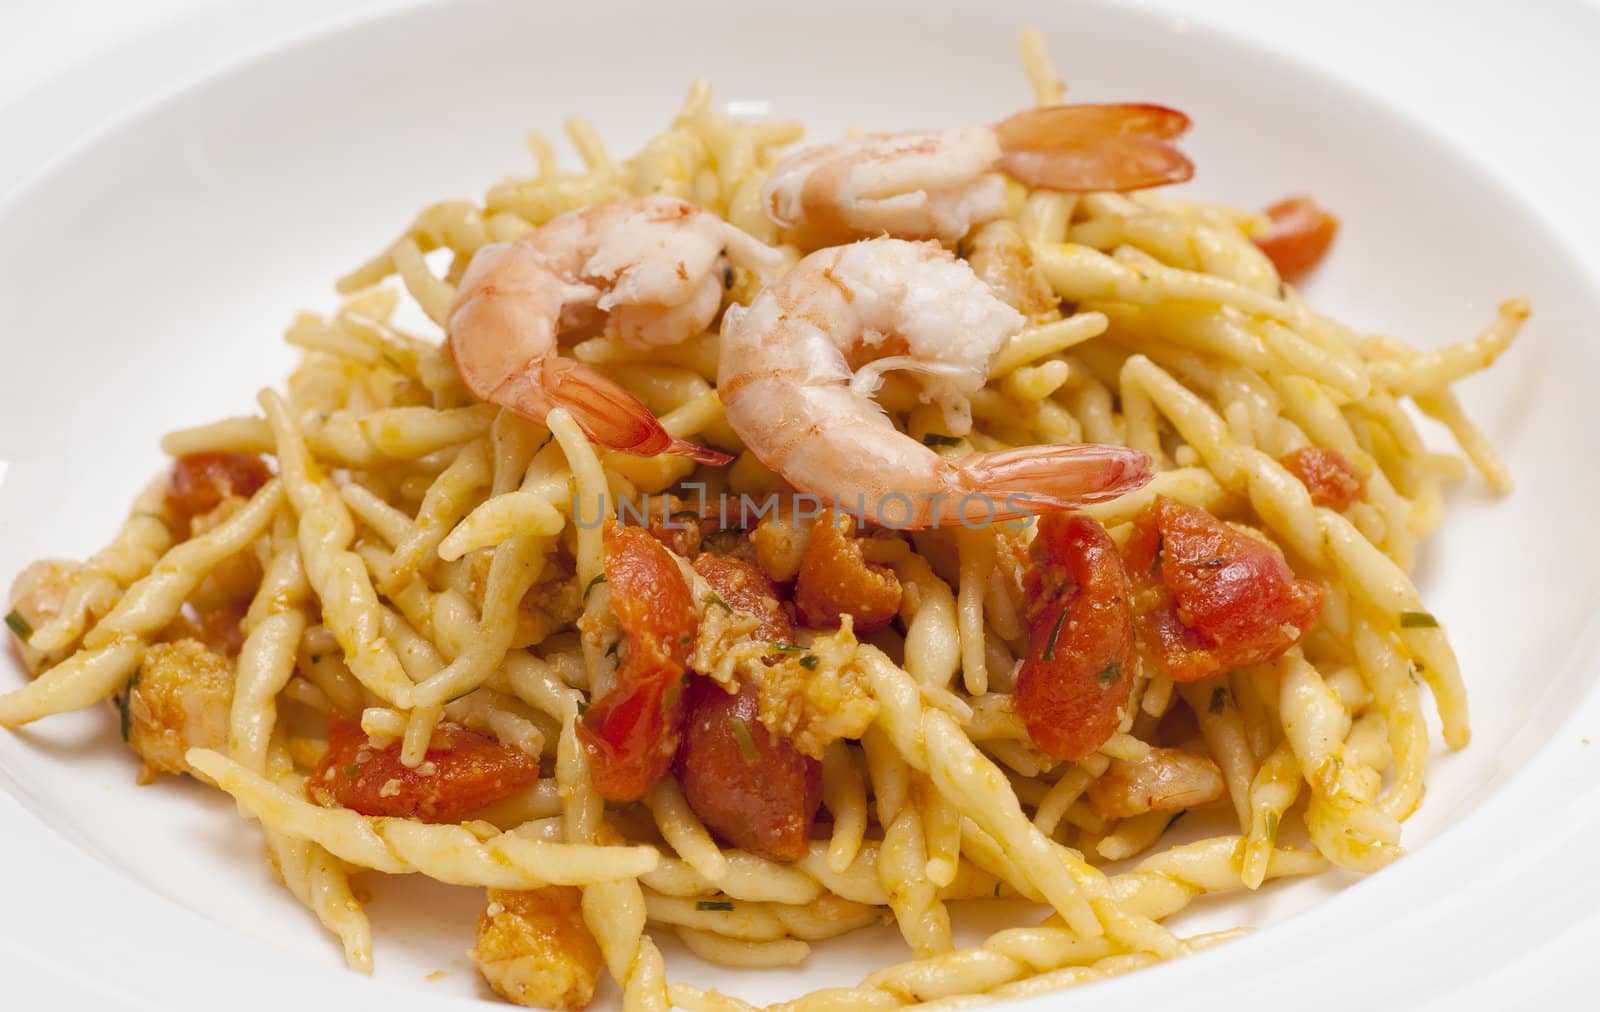 dish of pasta with a tomatoe shrimp sauce